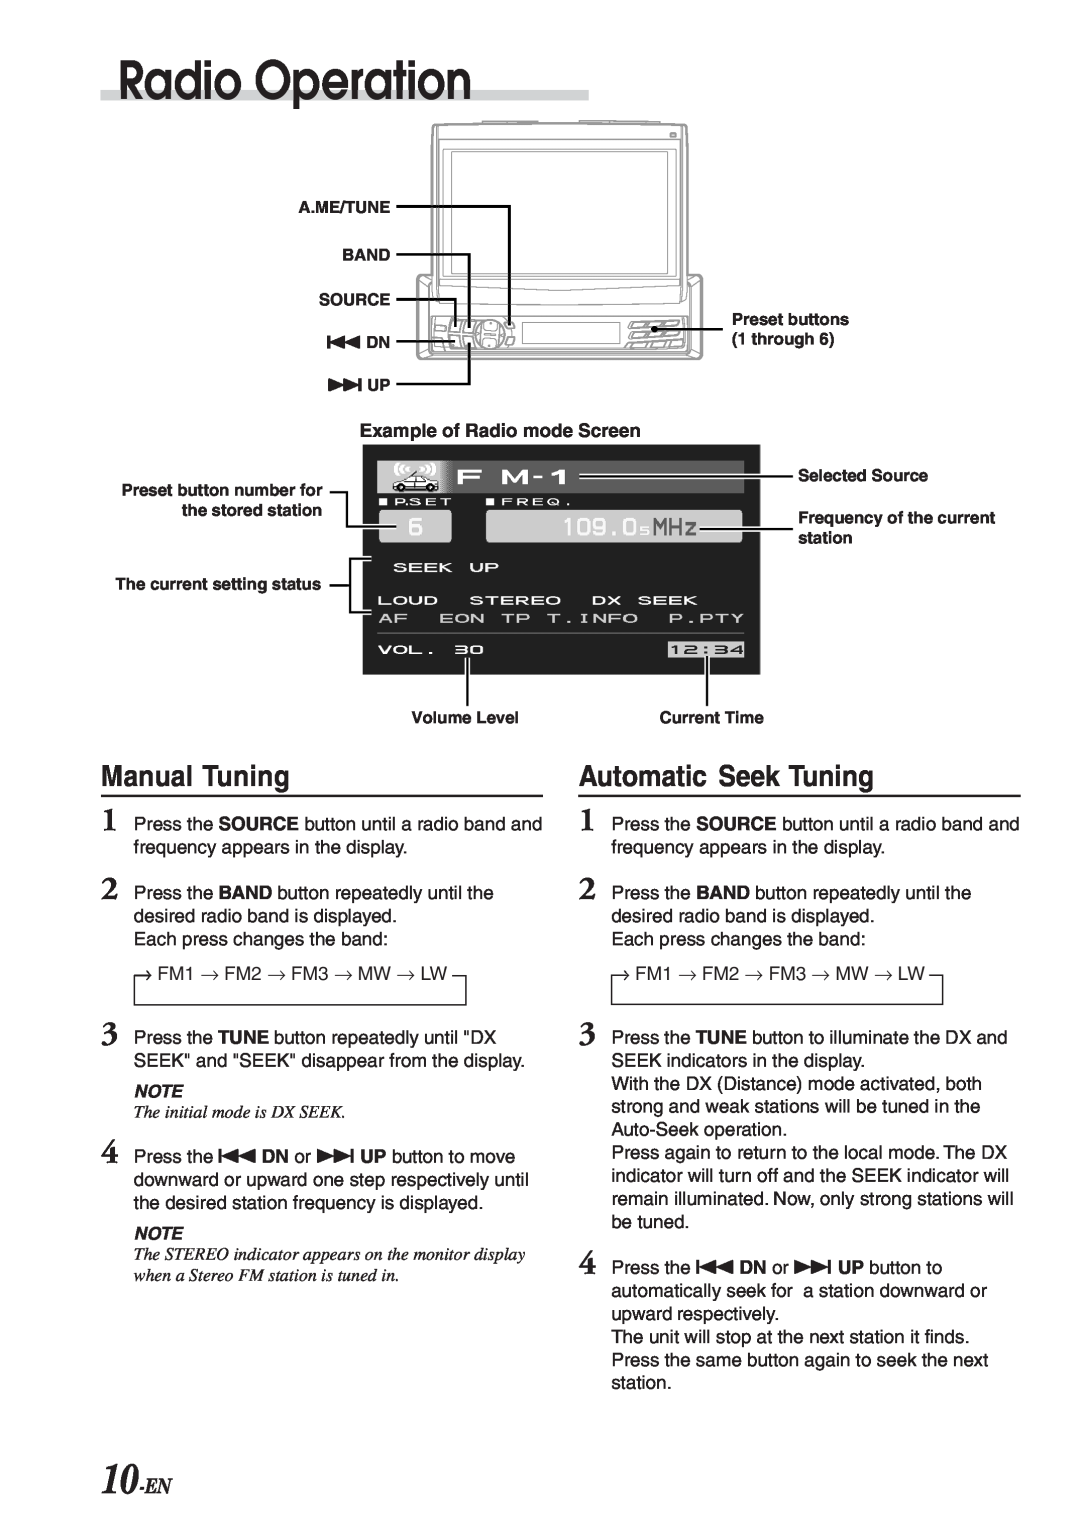 Alpine CVA-1003R owner manual Radio Operation, Manual Tuning, Automatic Seek Tuning, 10-EN, Example of Radio mode Screen 